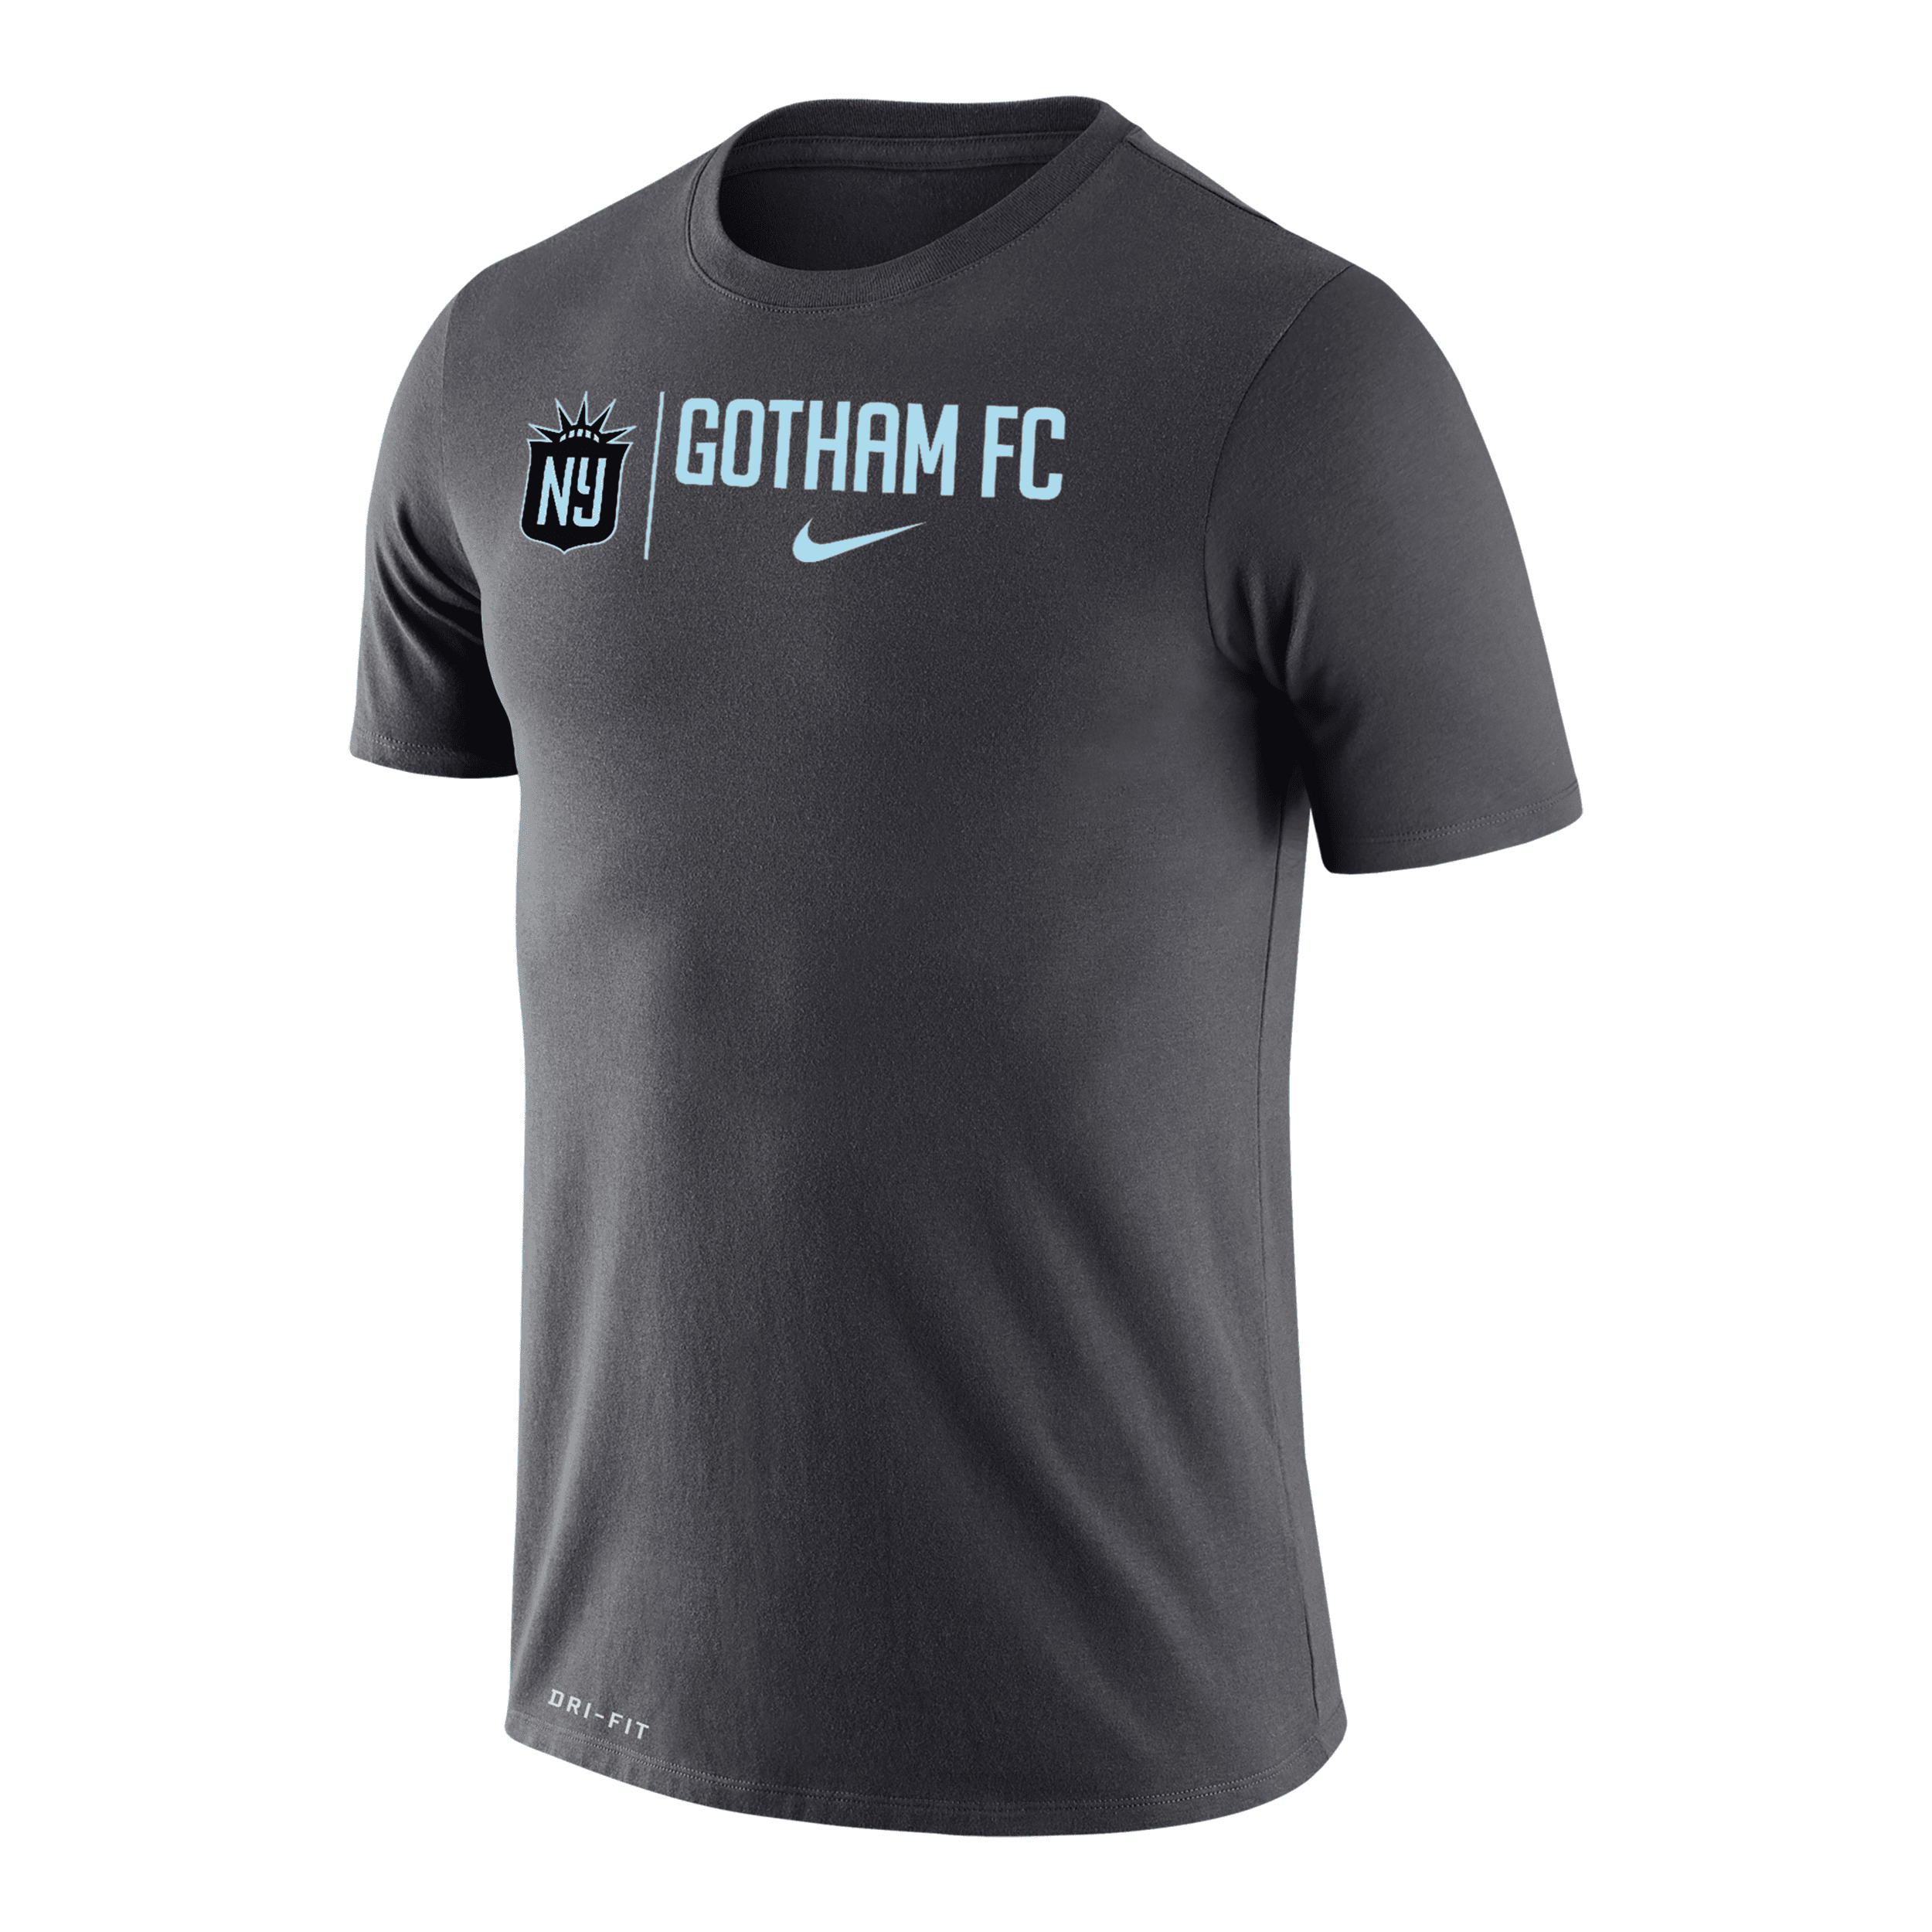 Nike Gotham Fc Legend  Men's Dri-fit Soccer T-shirt In Grey